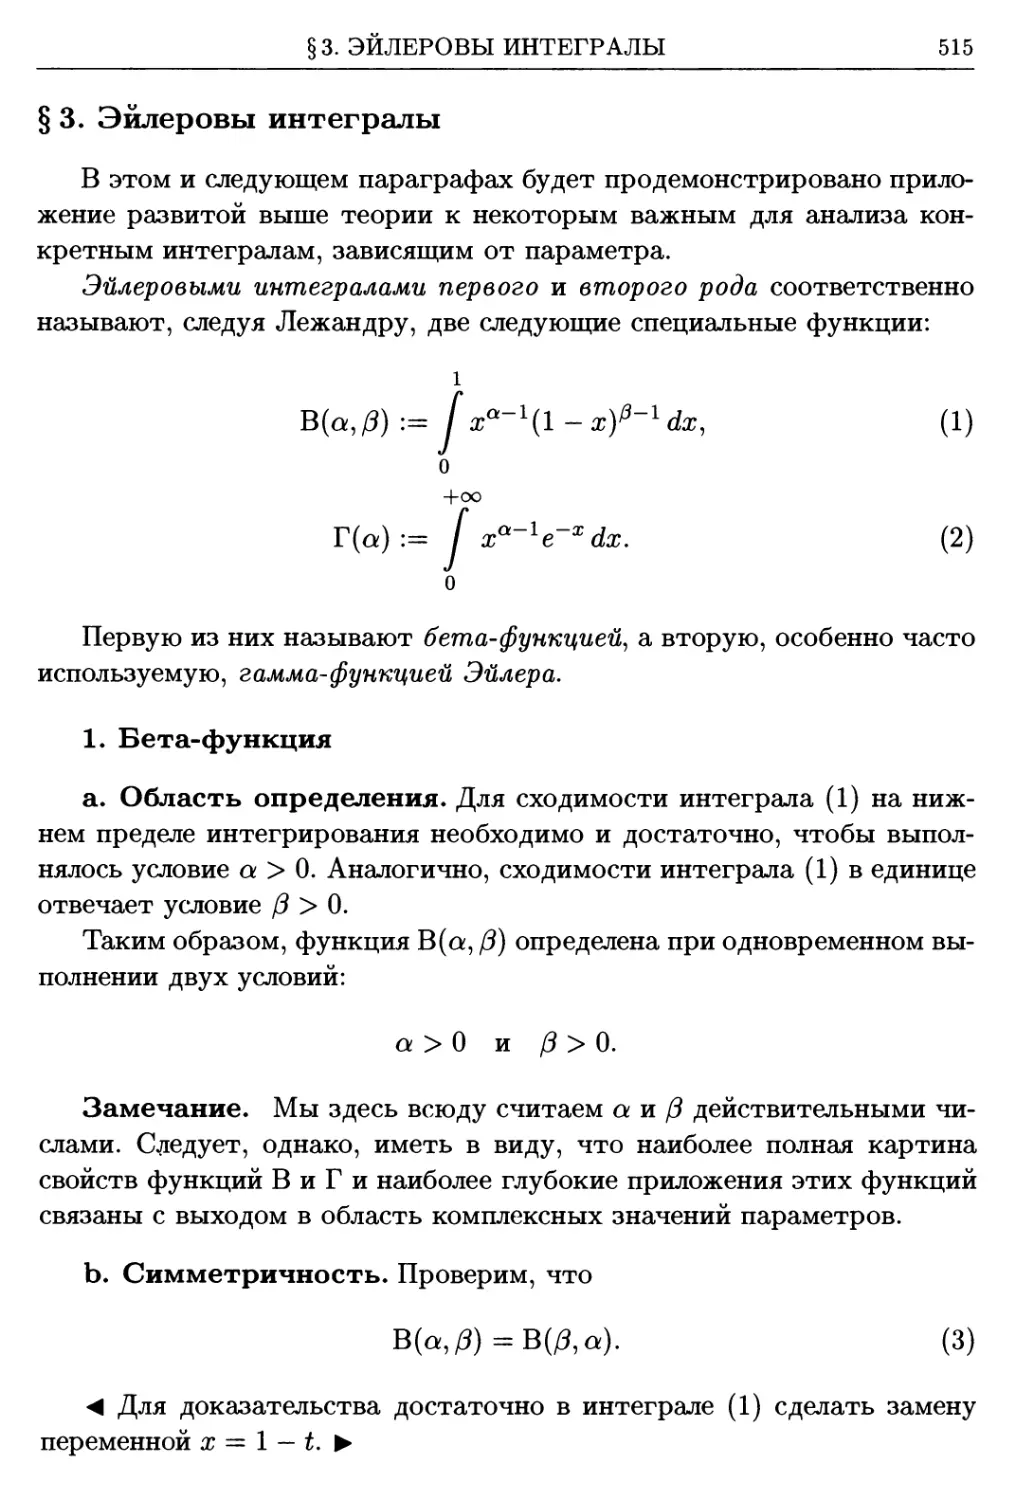 §3. Эйлеровы интегралы